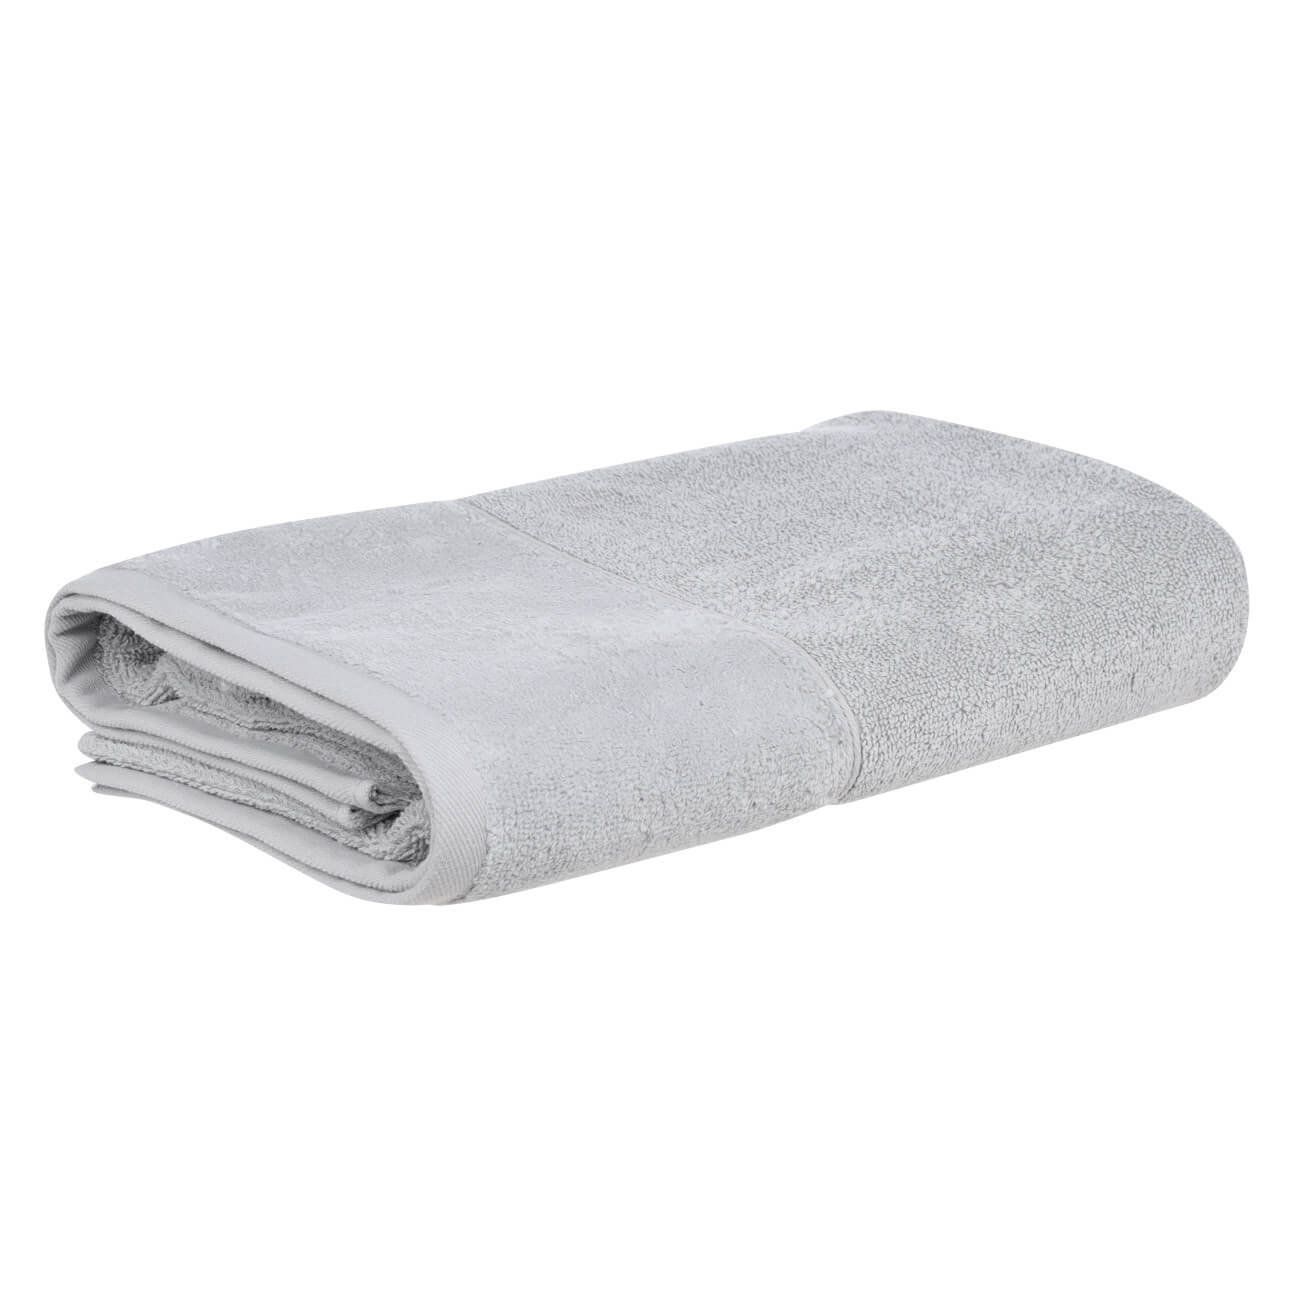 Полотенце, 50х90 см, хлопок, серое, Velvet touch одеяло хлопок оригинал р 140х205